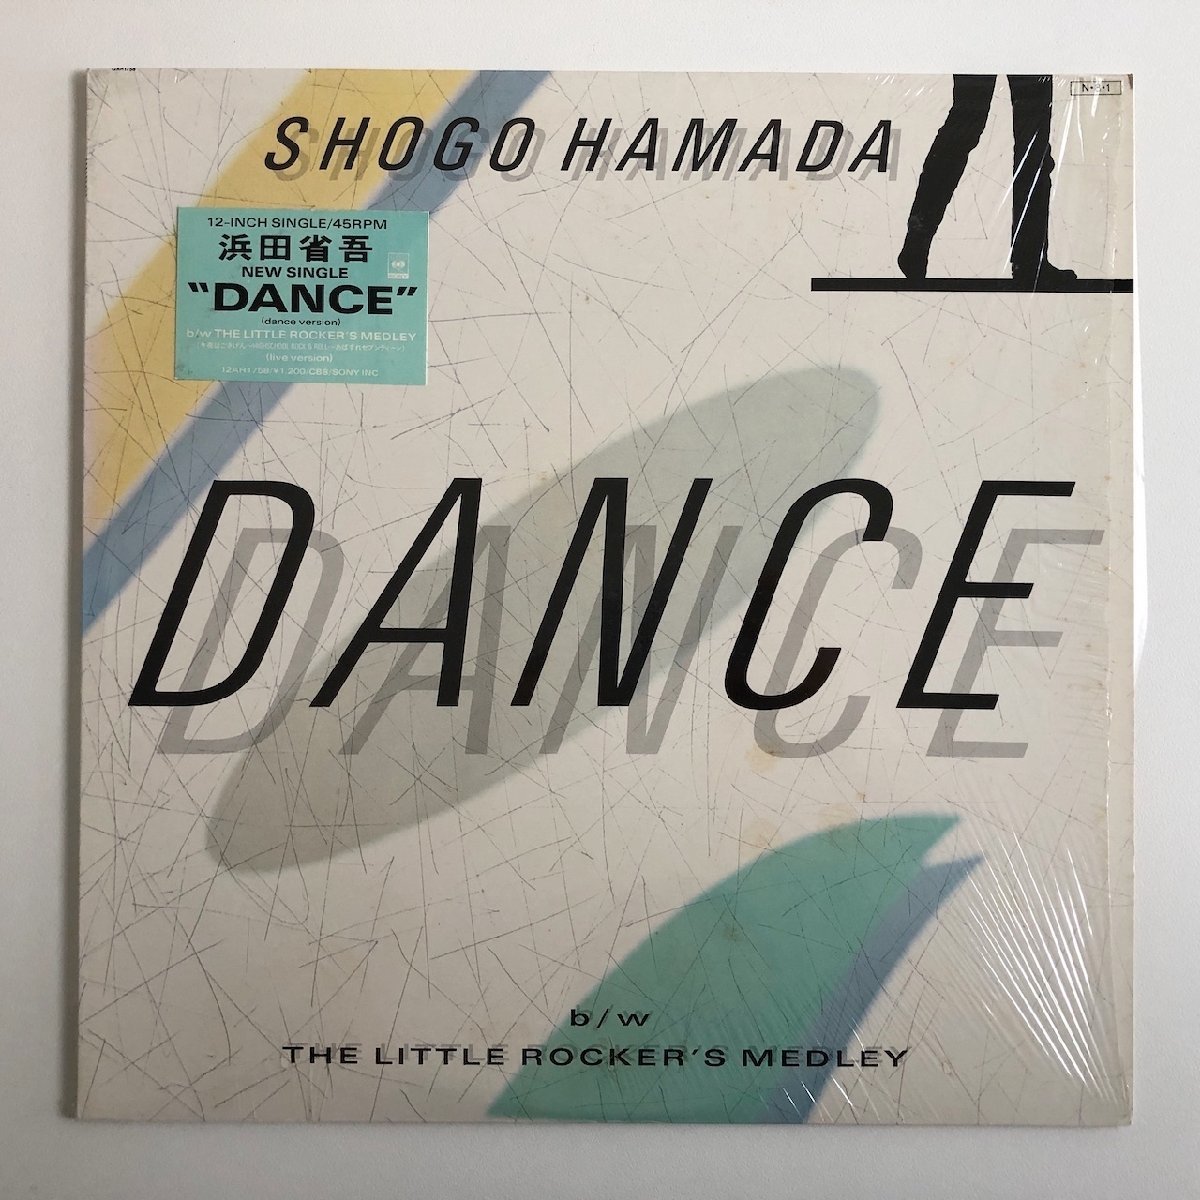 LP/ Hamada Shogo / [DANCE][THE LITTLE ROCKER\'S MEDLEY] / domestic record 45 rotation 12AH1758 30520S